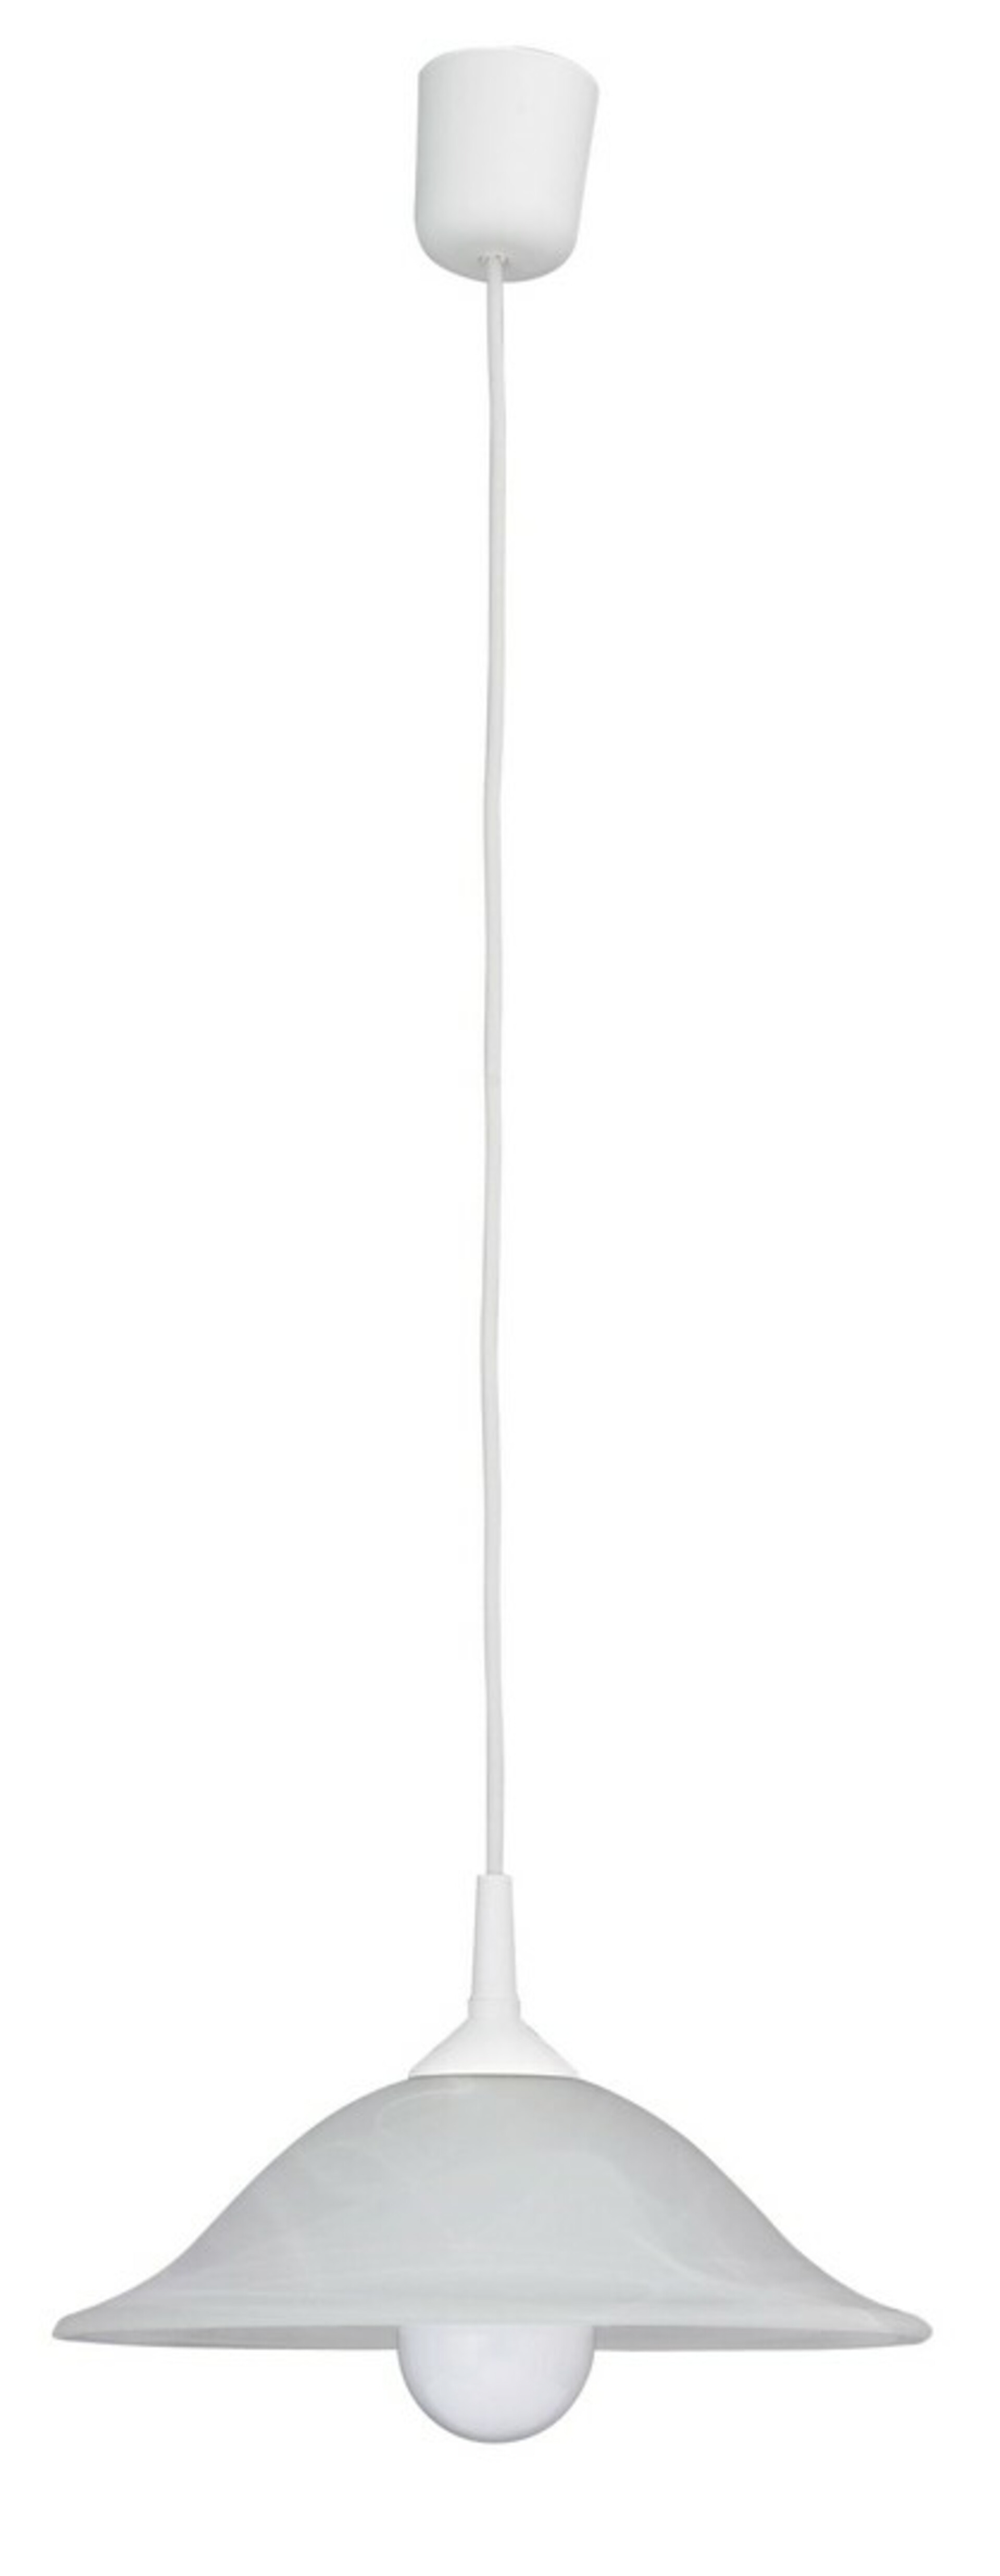 Rabalux závěsné svítidlo Alabastro E27 1x MAX 60W bílé alabastrové sklo 3905